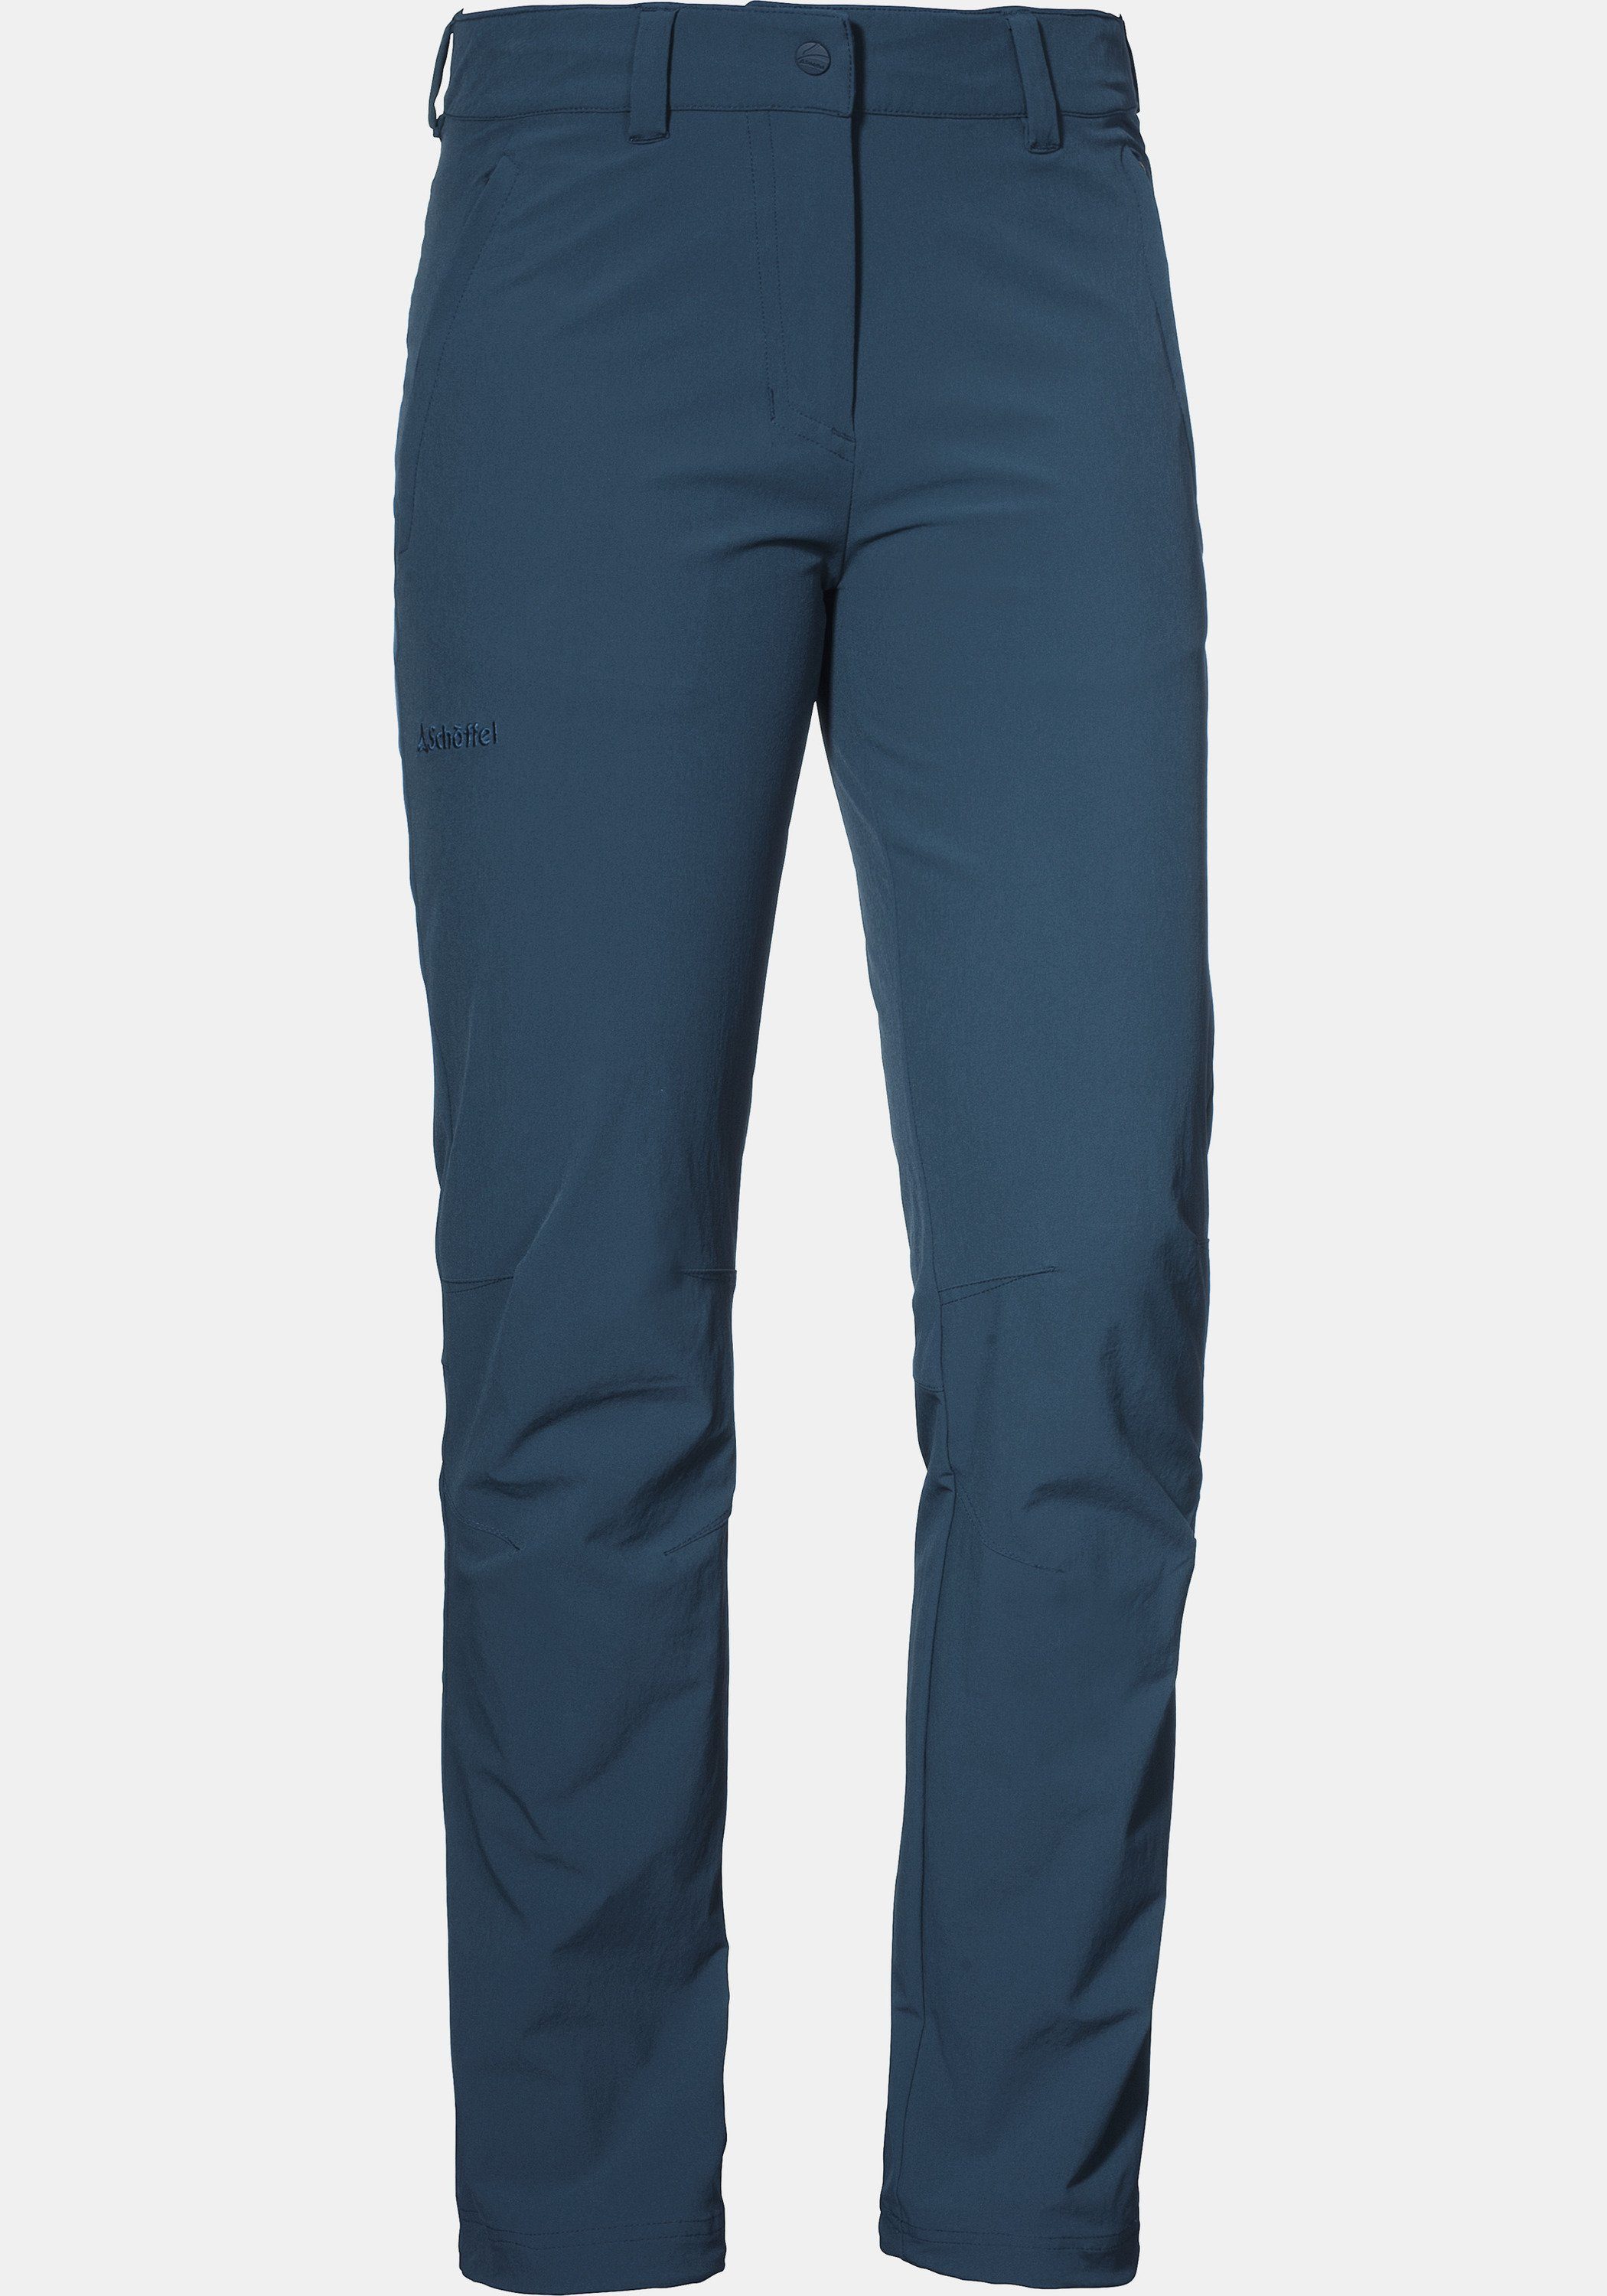 Schöffel Outdoorhose Pants Engadin1 dunkelblau